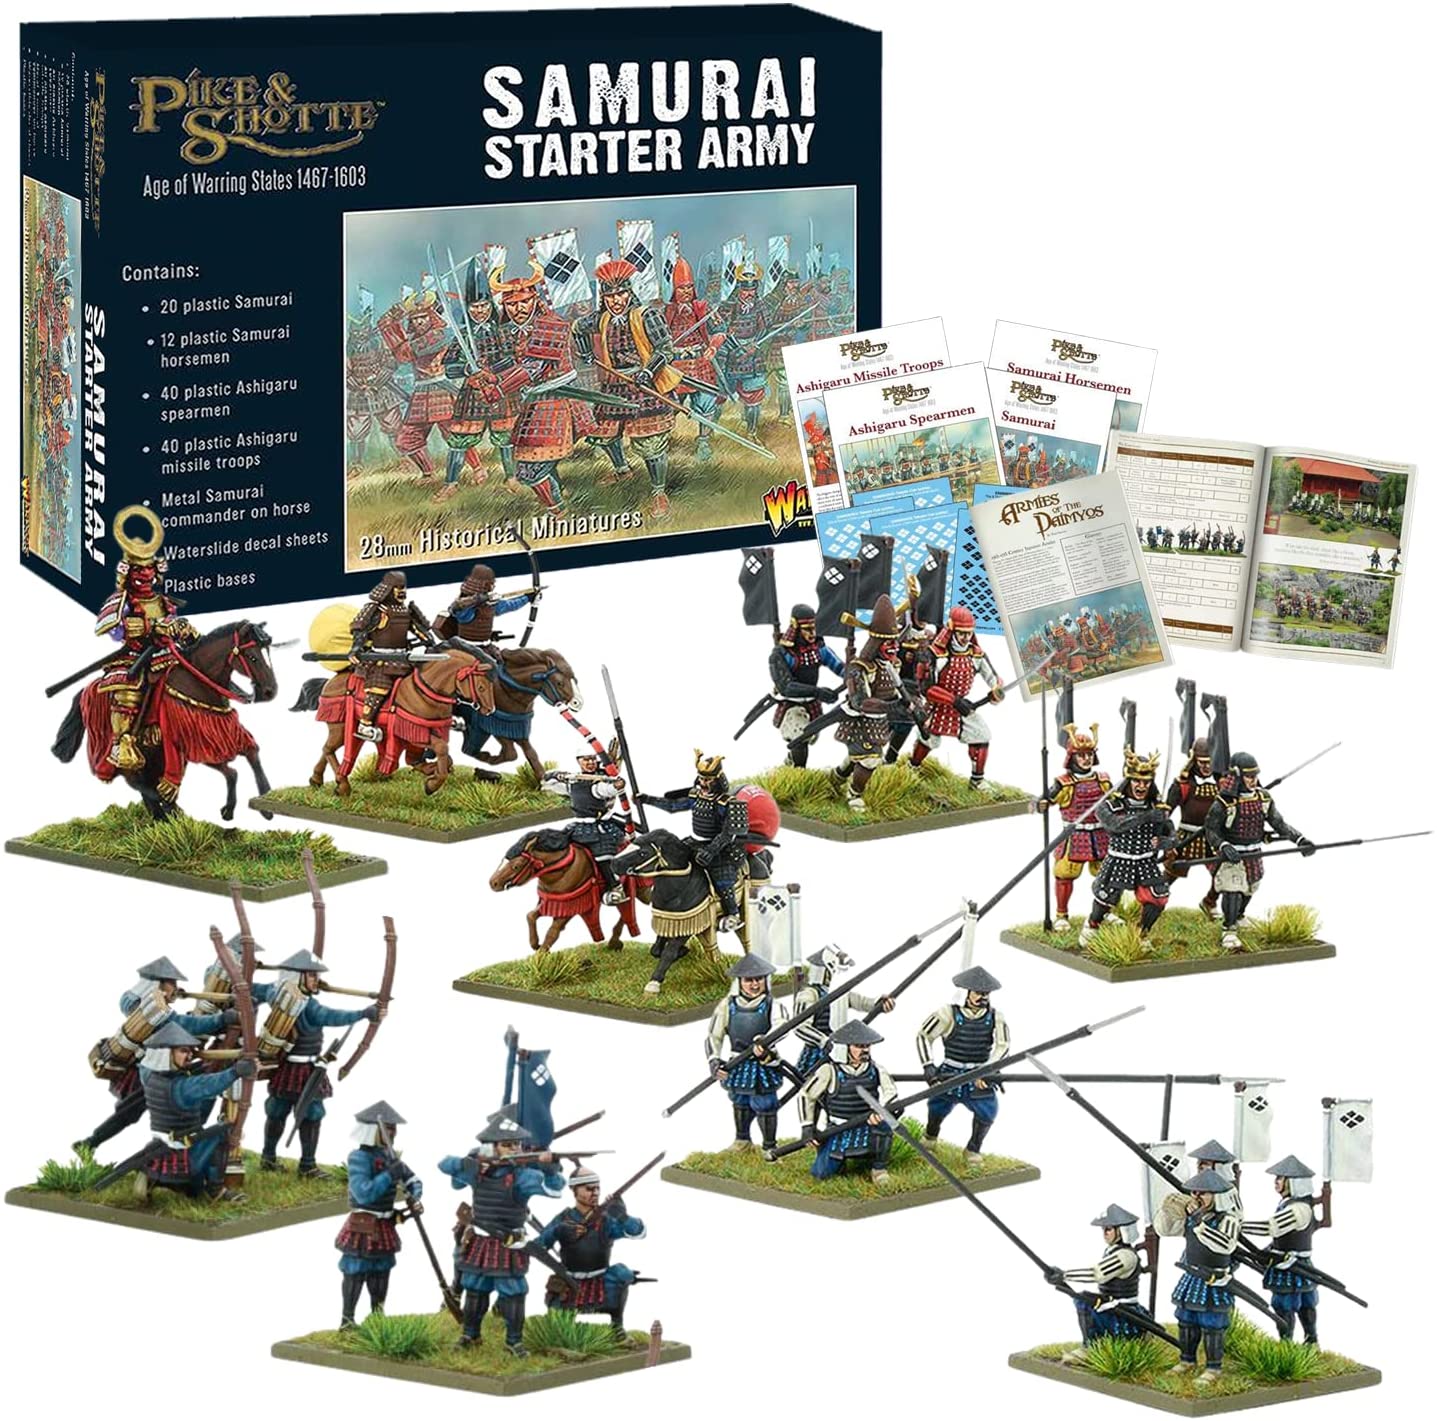 Pike and Shotte: Feudal Japan 1467 - 1603: Samurai Starter Army